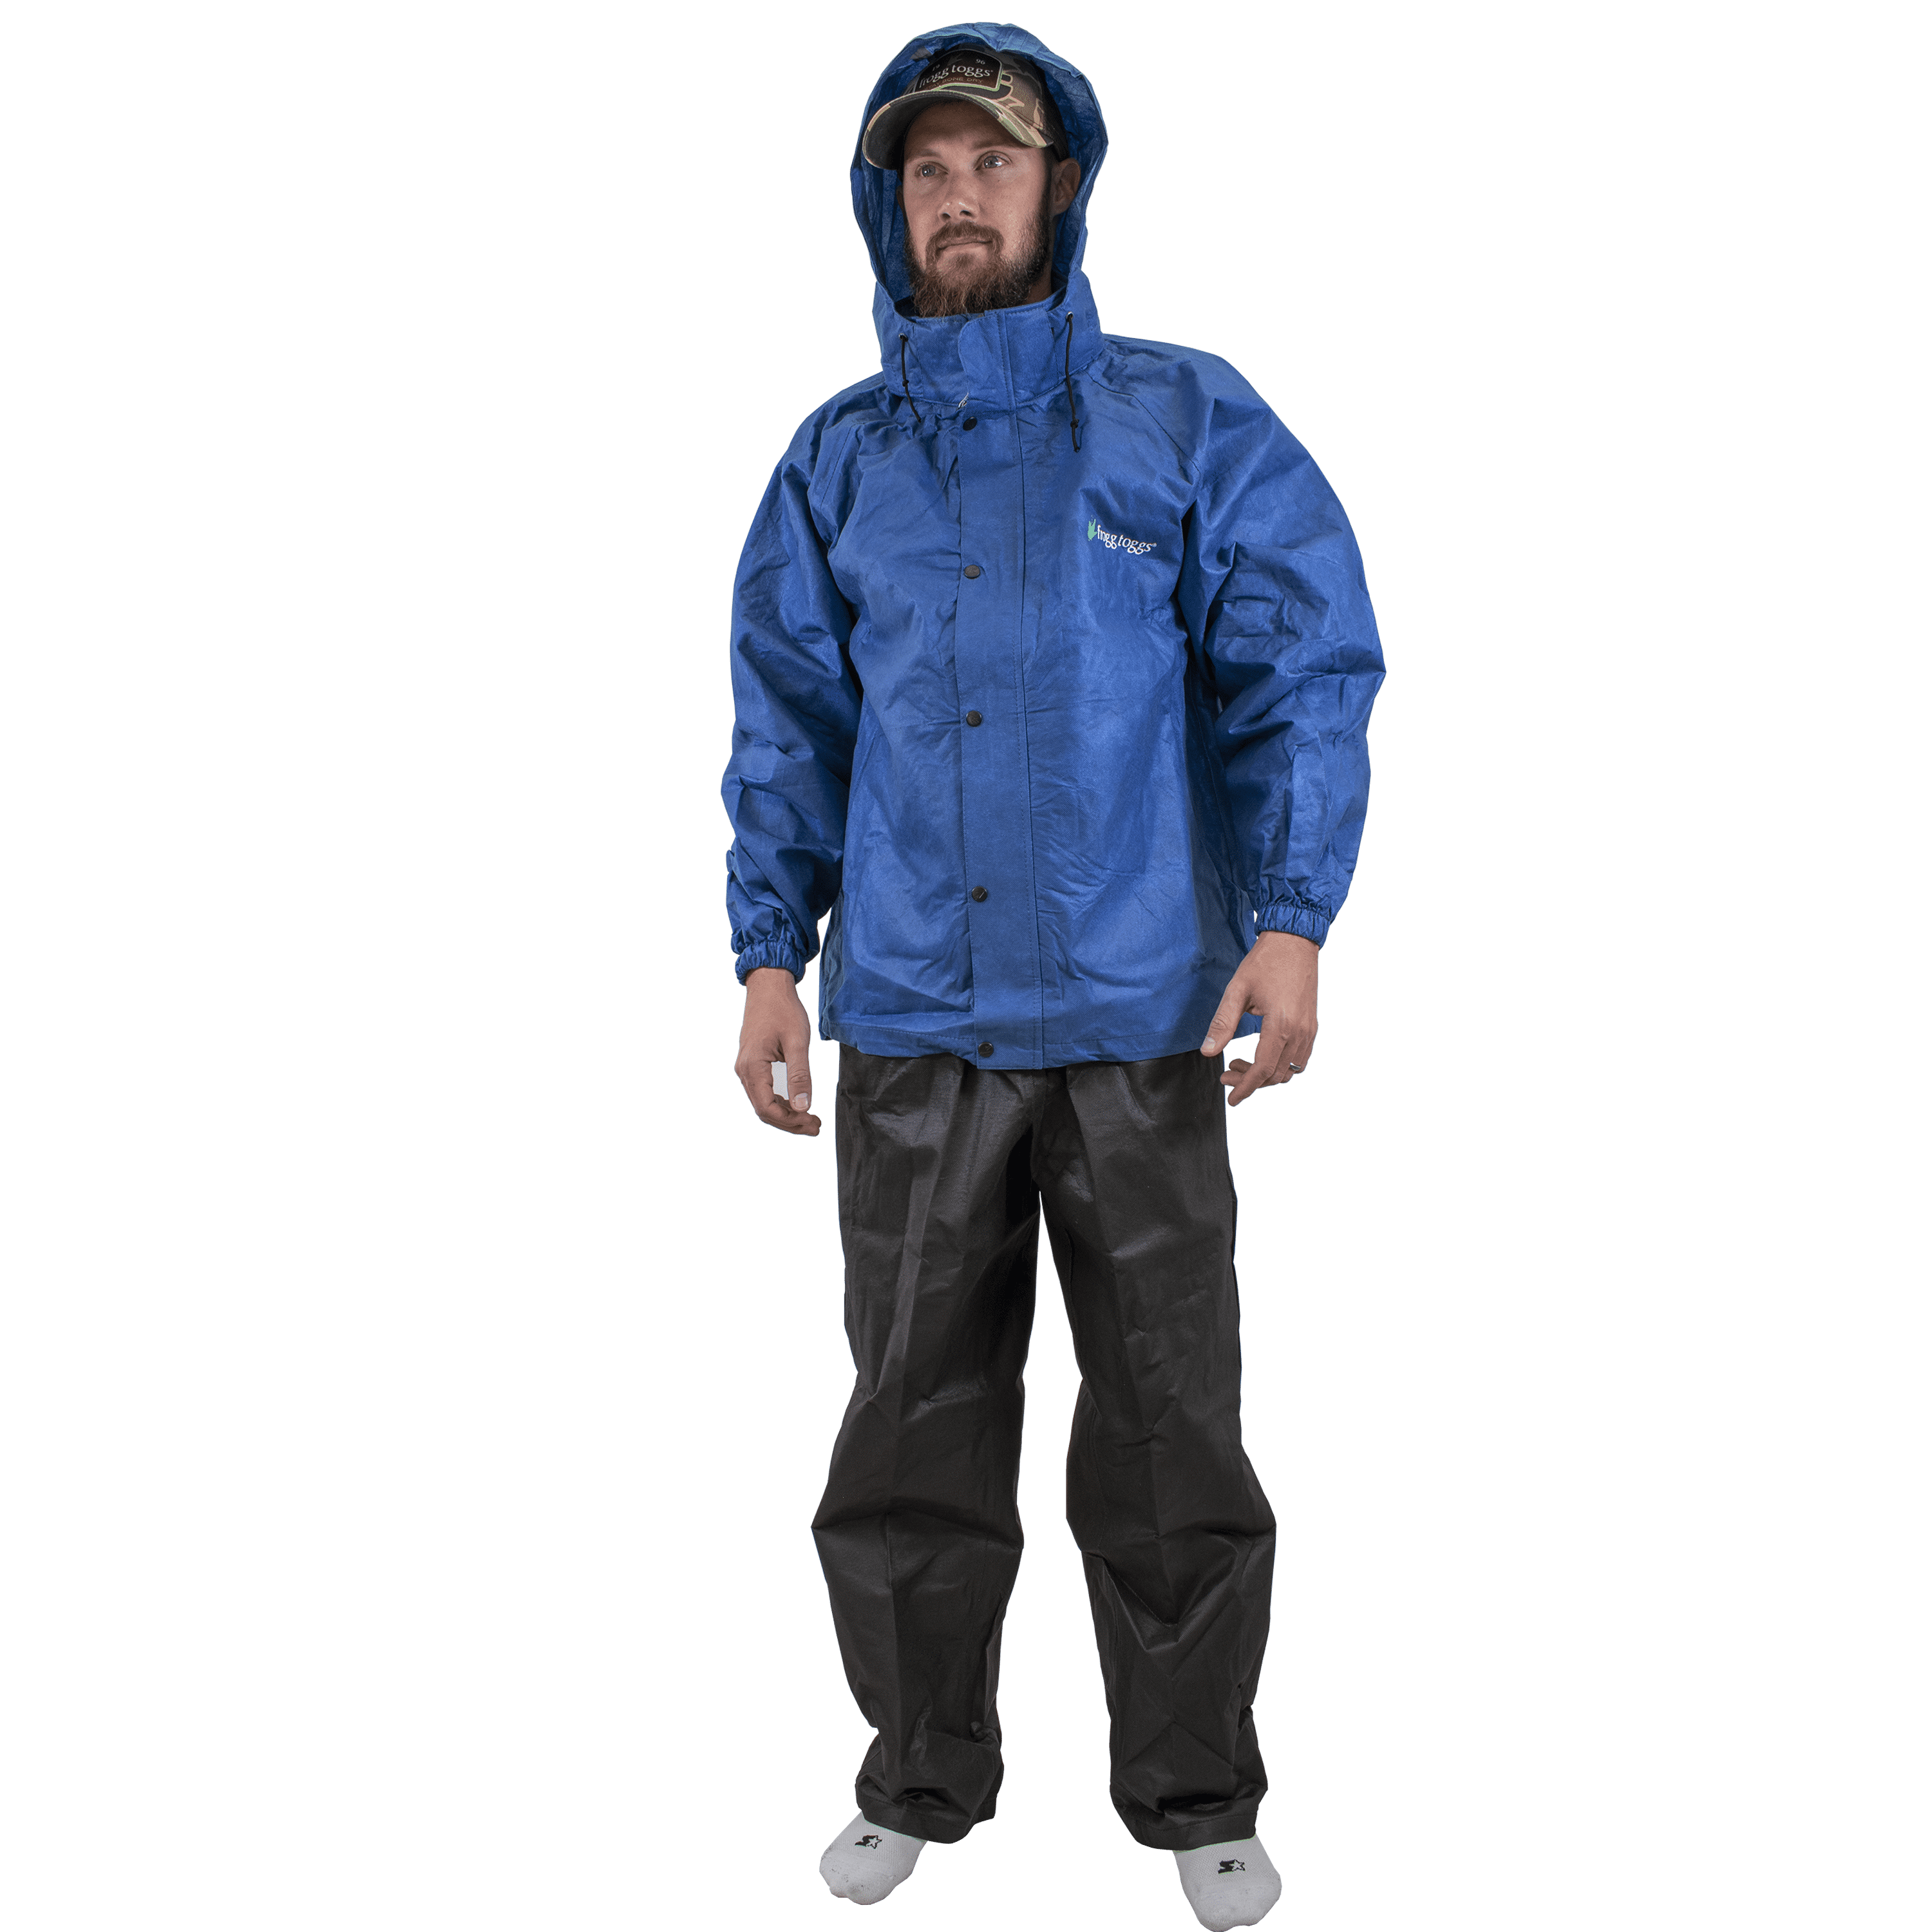 Frogg Toggs All Sport Rain Suit, Royal Blue Jacket/Black Pants 